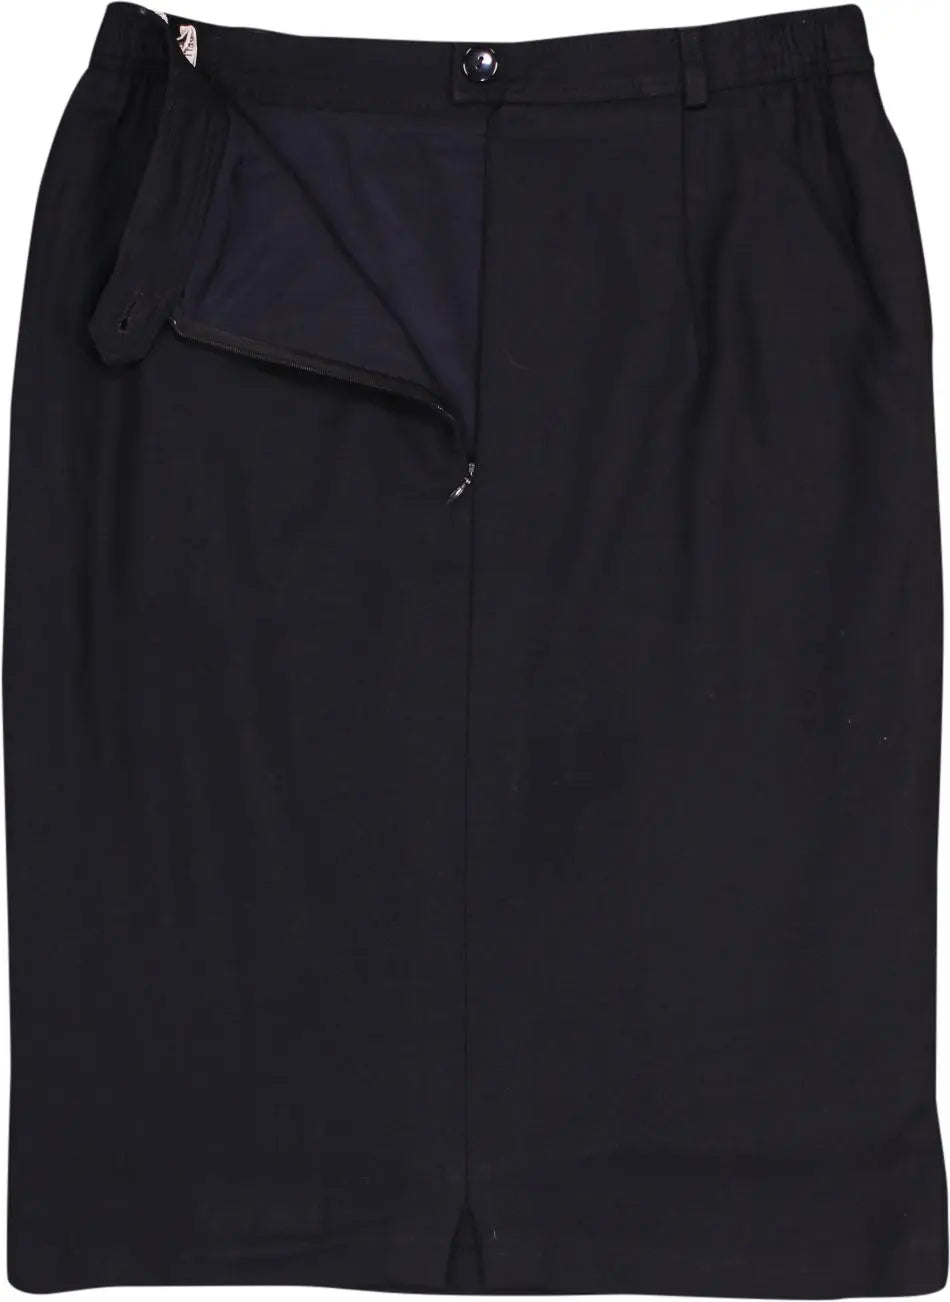 Seda Modell - Black Wool Skirt- ThriftTale.com - Vintage and second handclothing